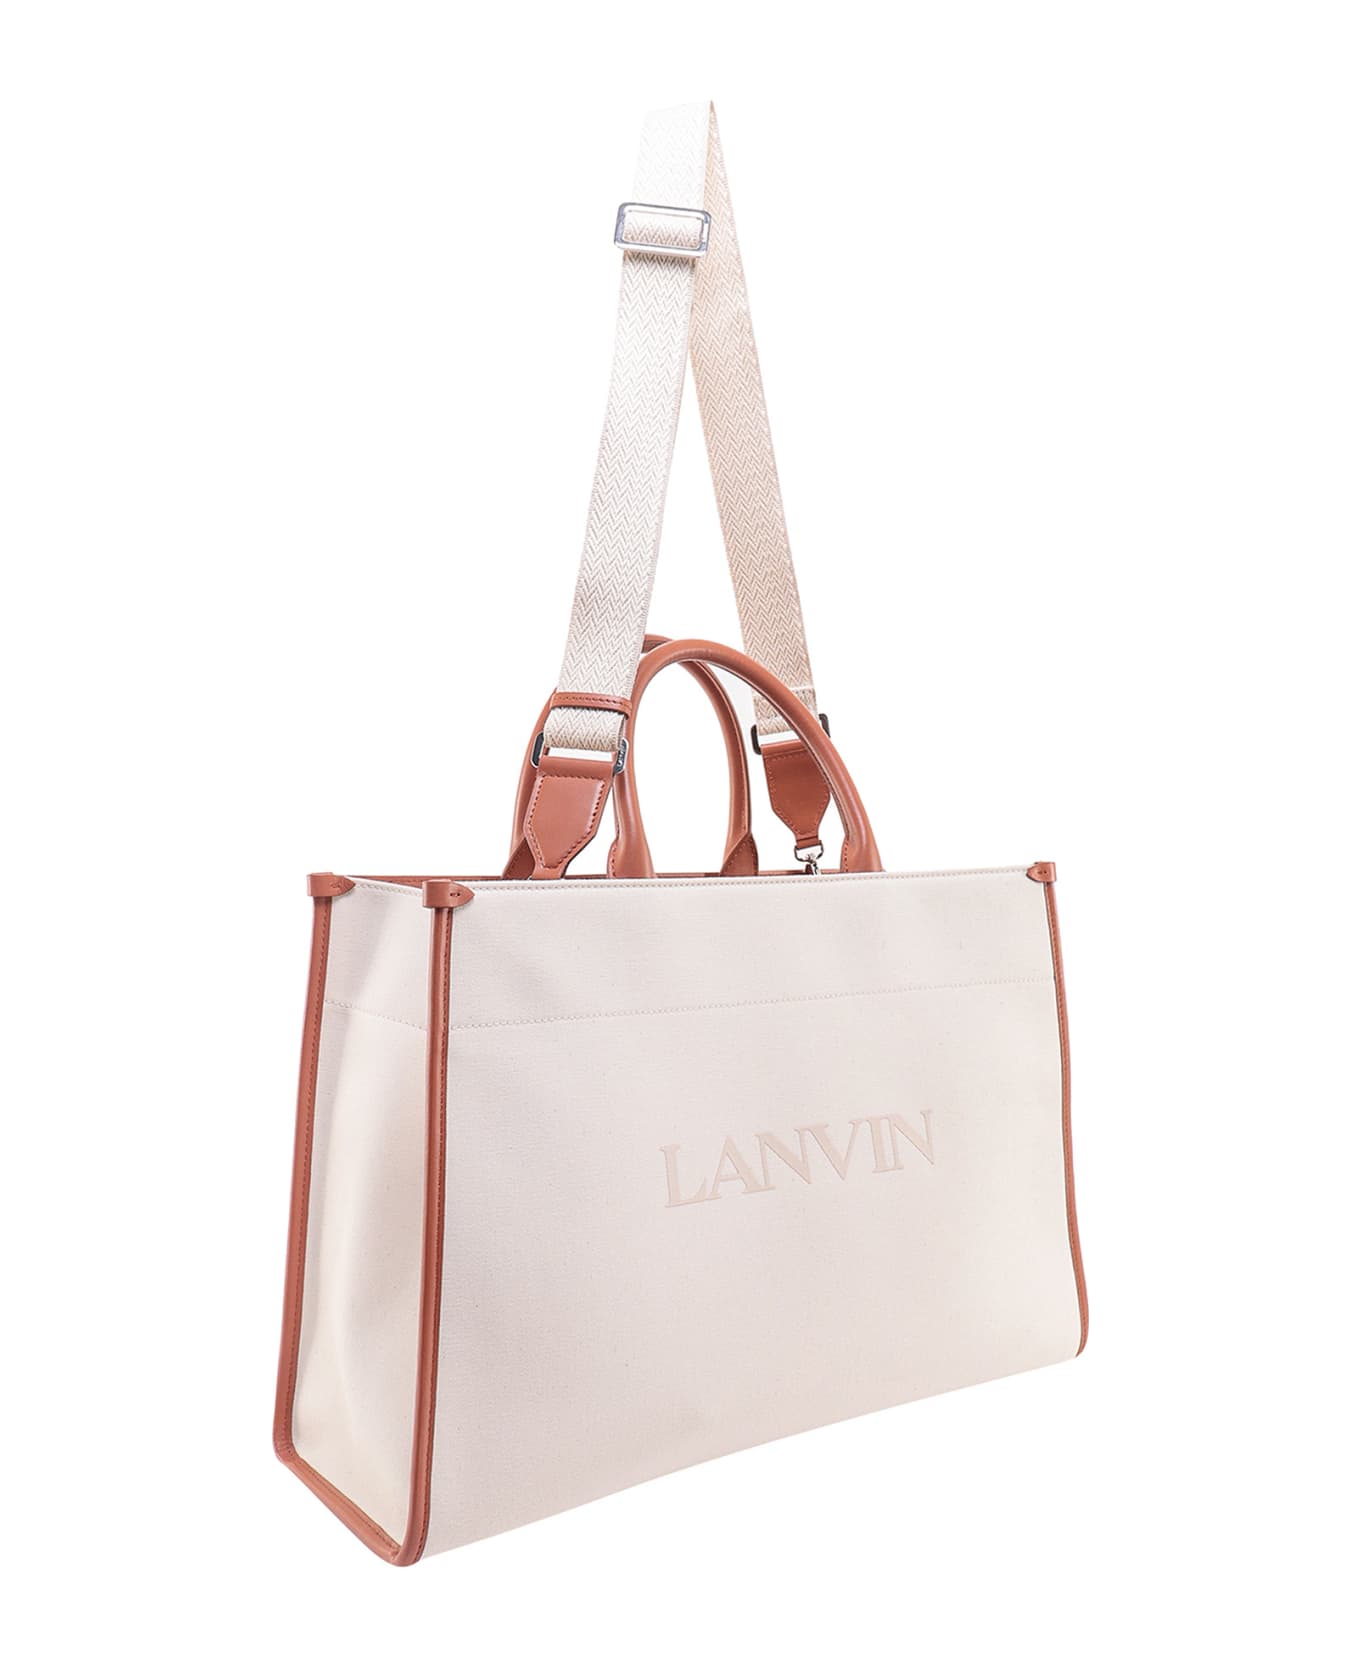 Lanvin Handbag - Beige トートバッグ